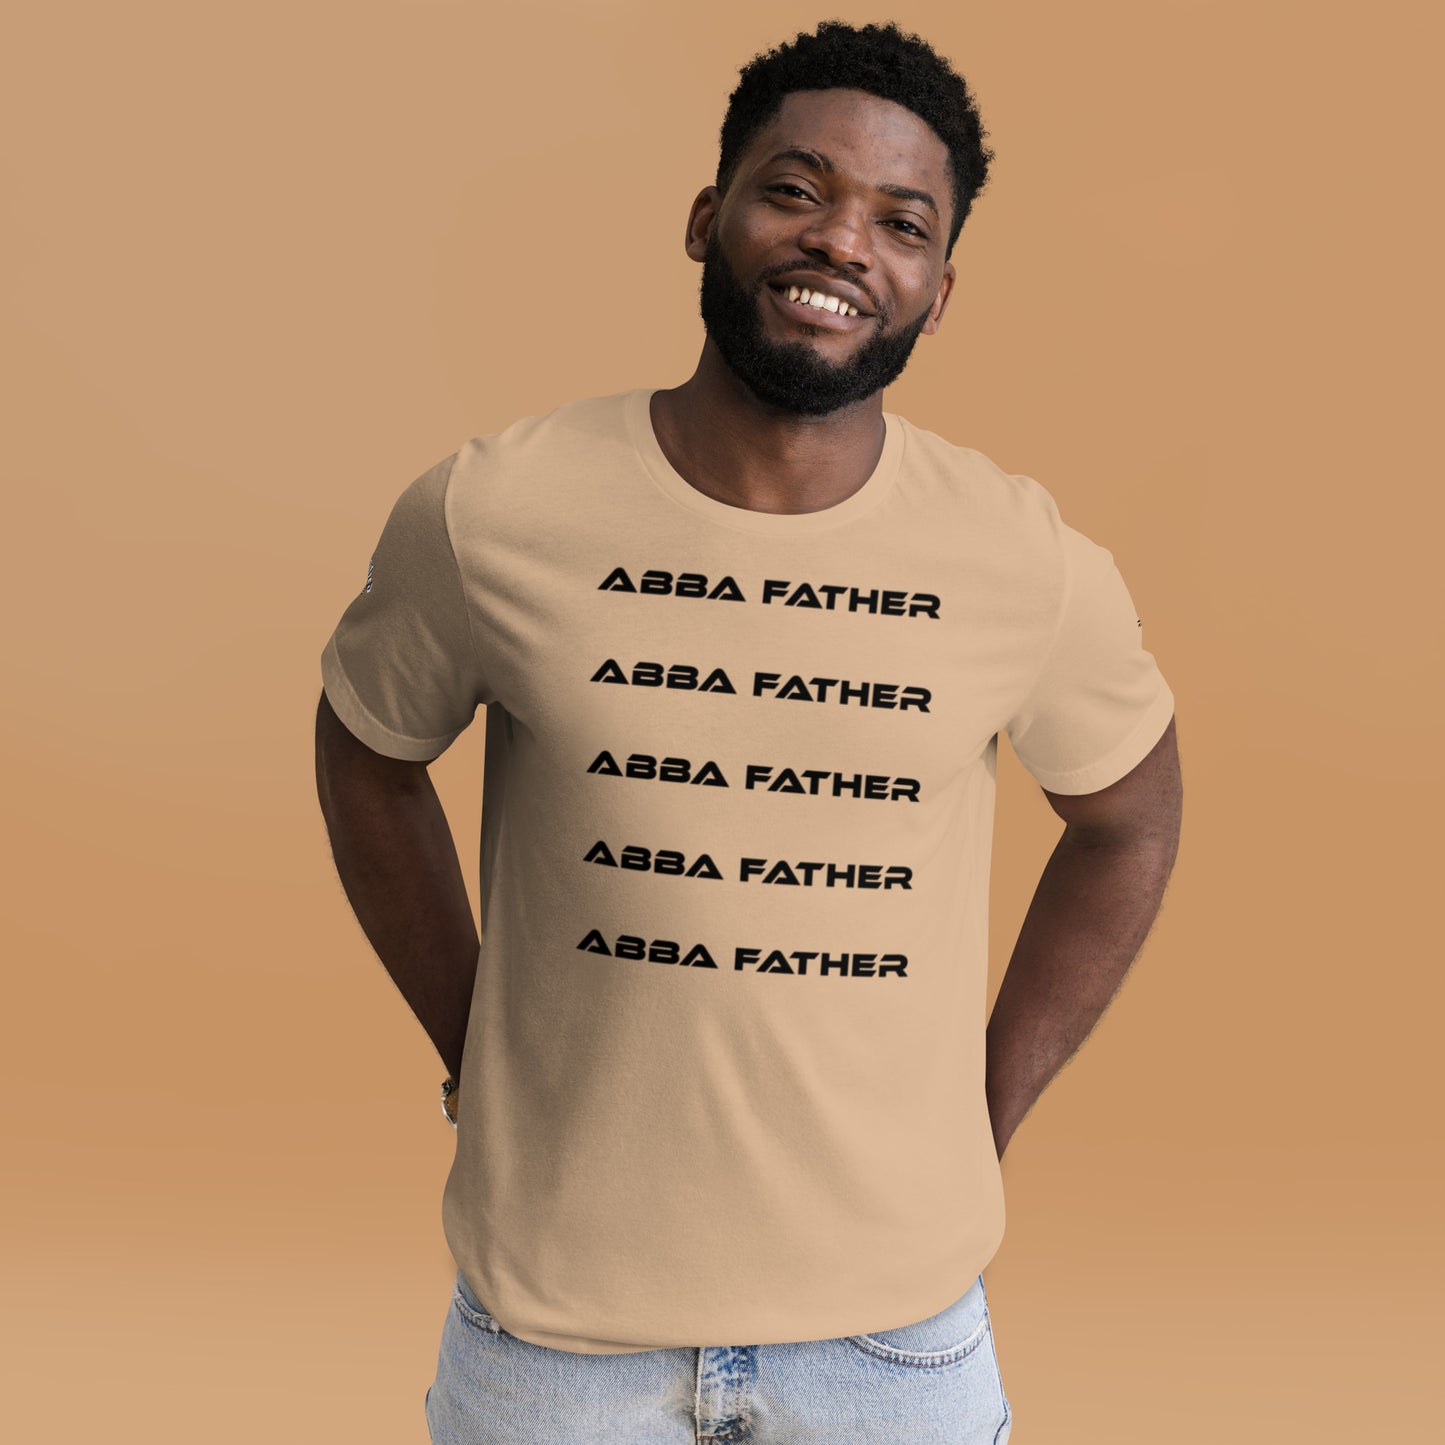 ABBA FATHER- Unisex t-shirt